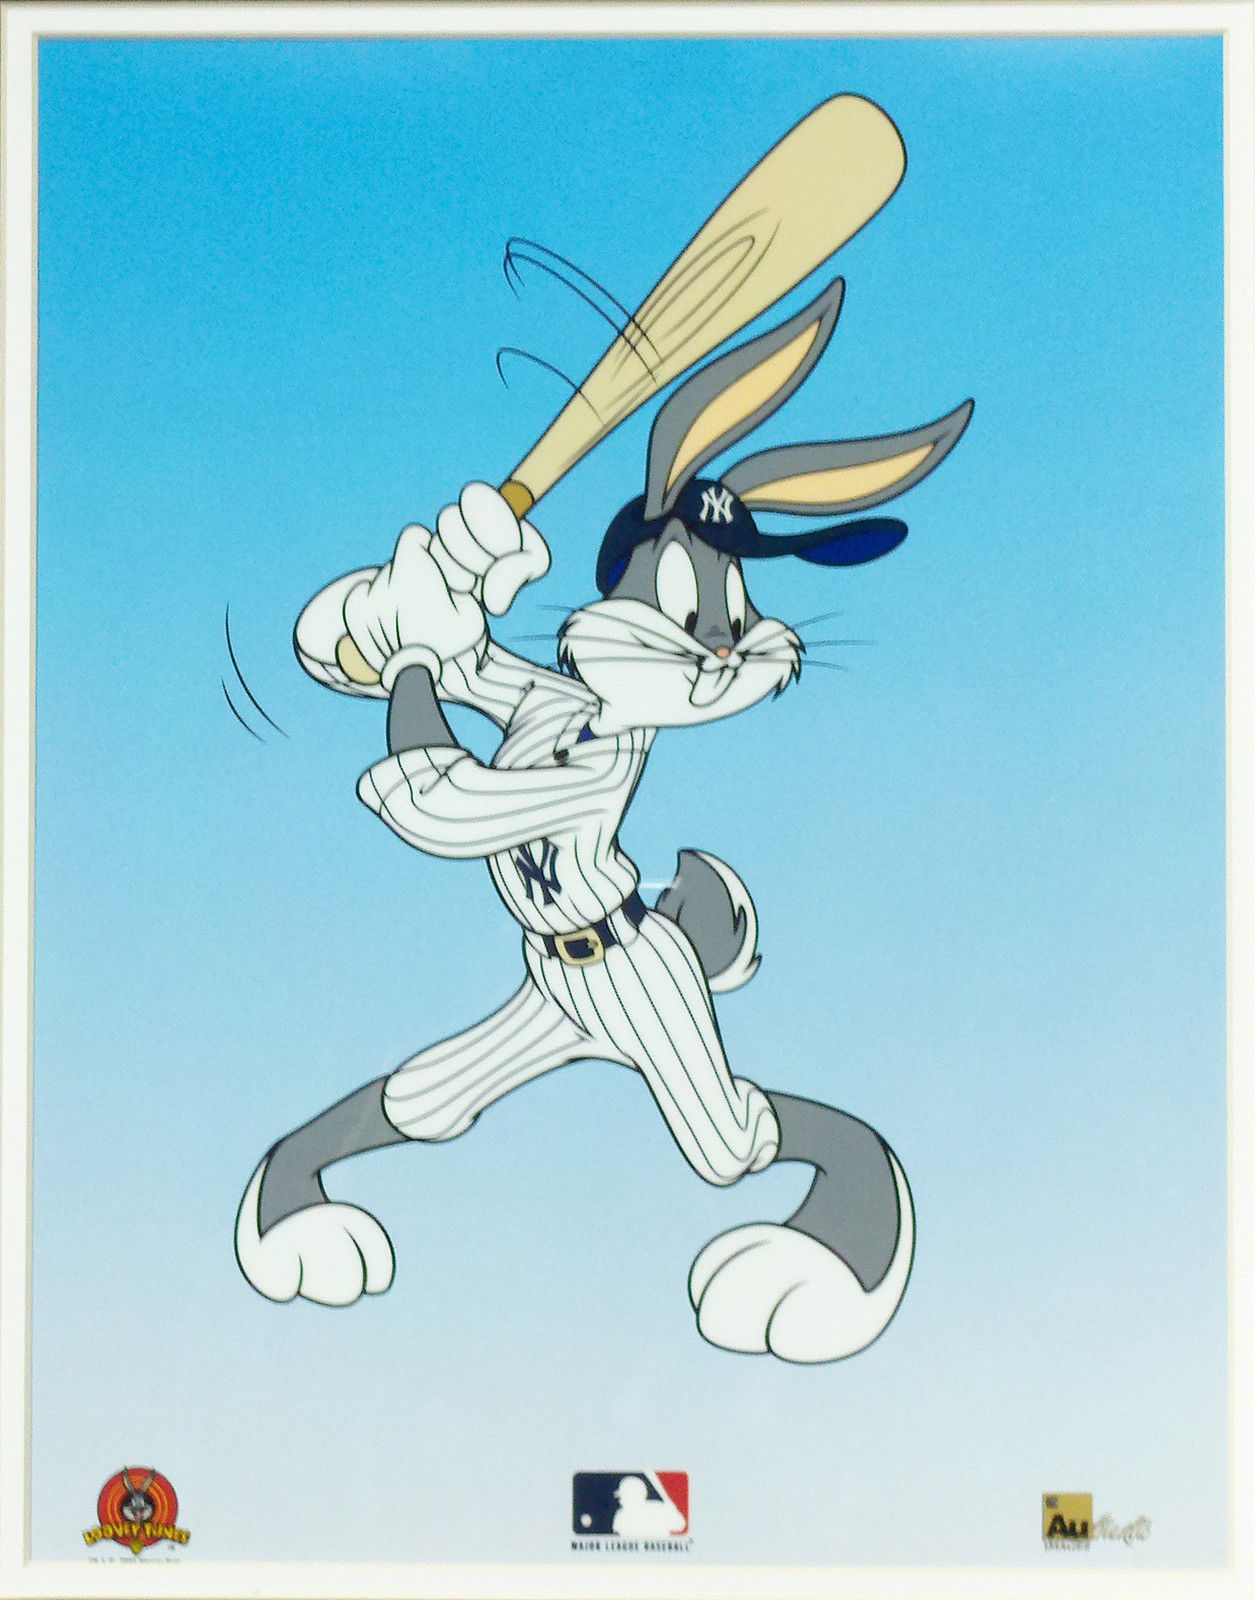 New York Mets Looney Tunes Bugs Bunny Jersey Baseball Shirt White